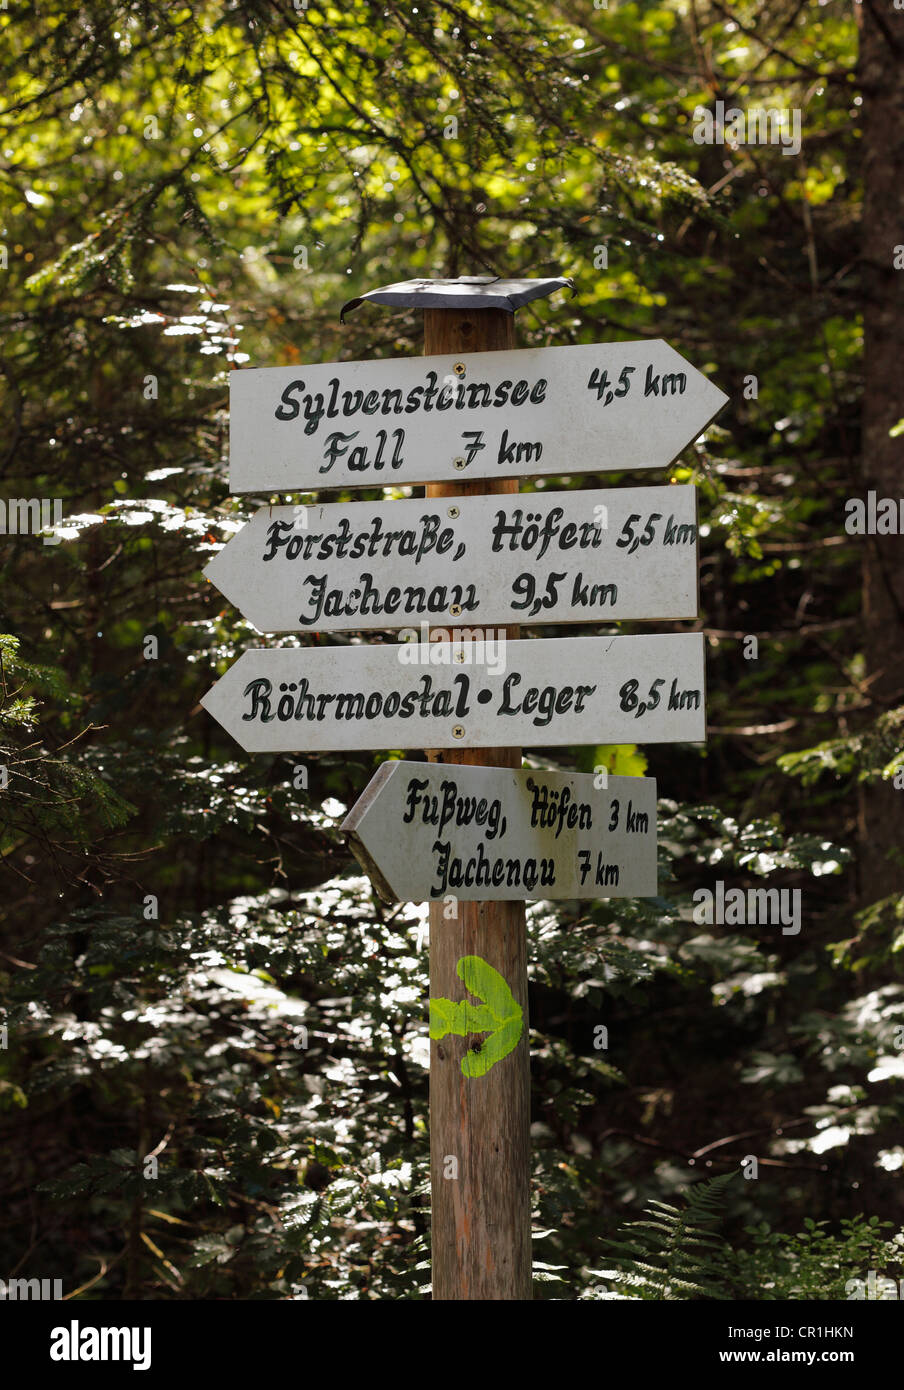 Signpost in the Schronbachtal valley, municipality of Jachenau, Isarwinkel region, Upper Bavaria, Bavaria, Germany, Europe Stock Photo